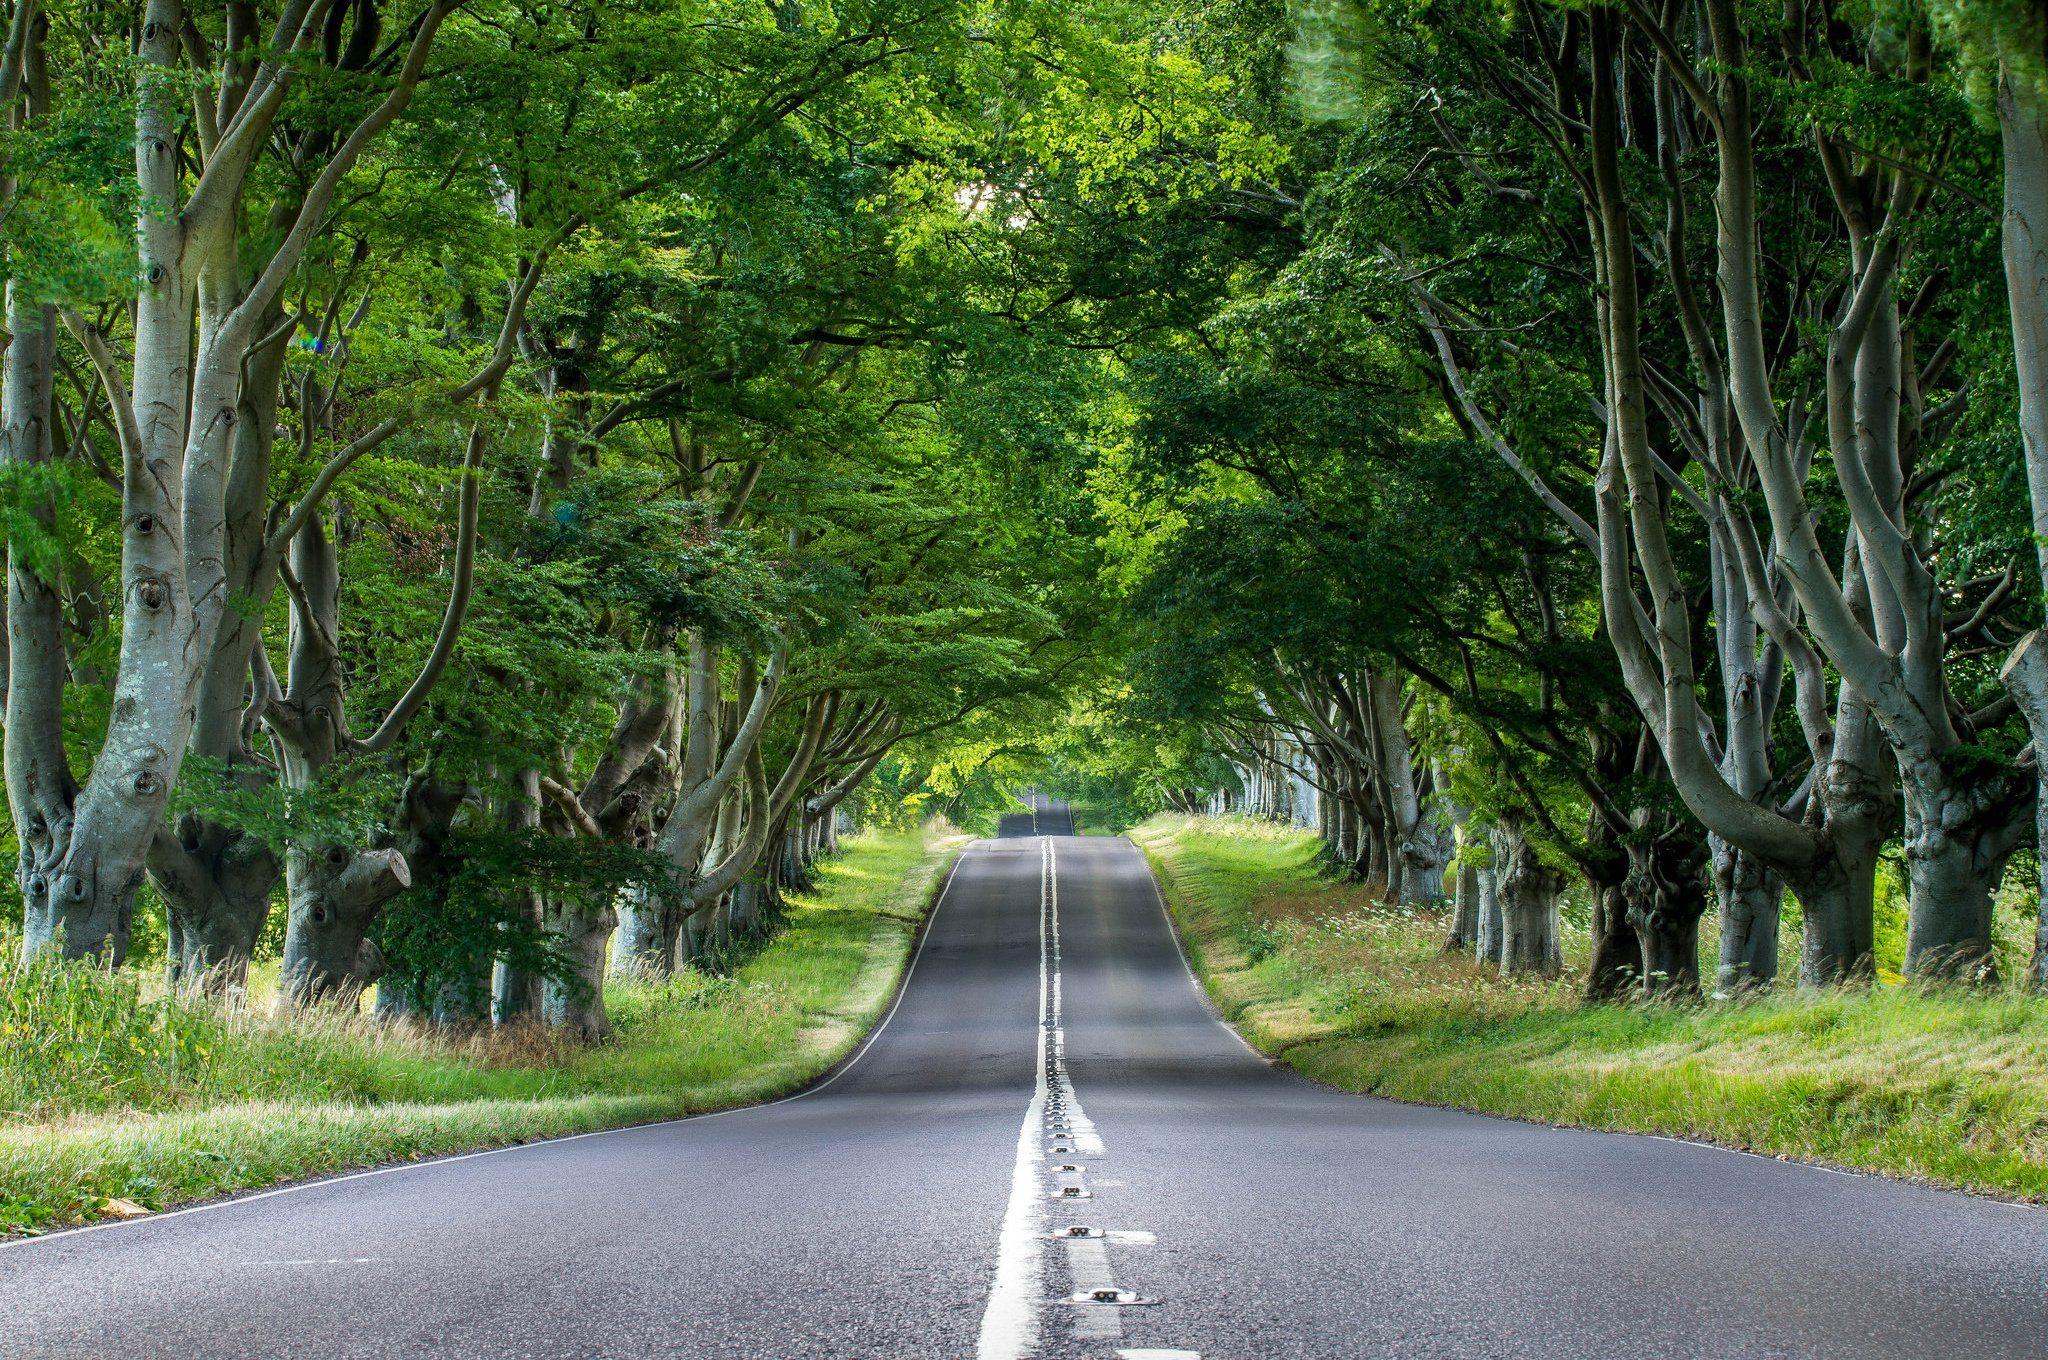 40,000+ Free Road & Nature Images - Pixabay